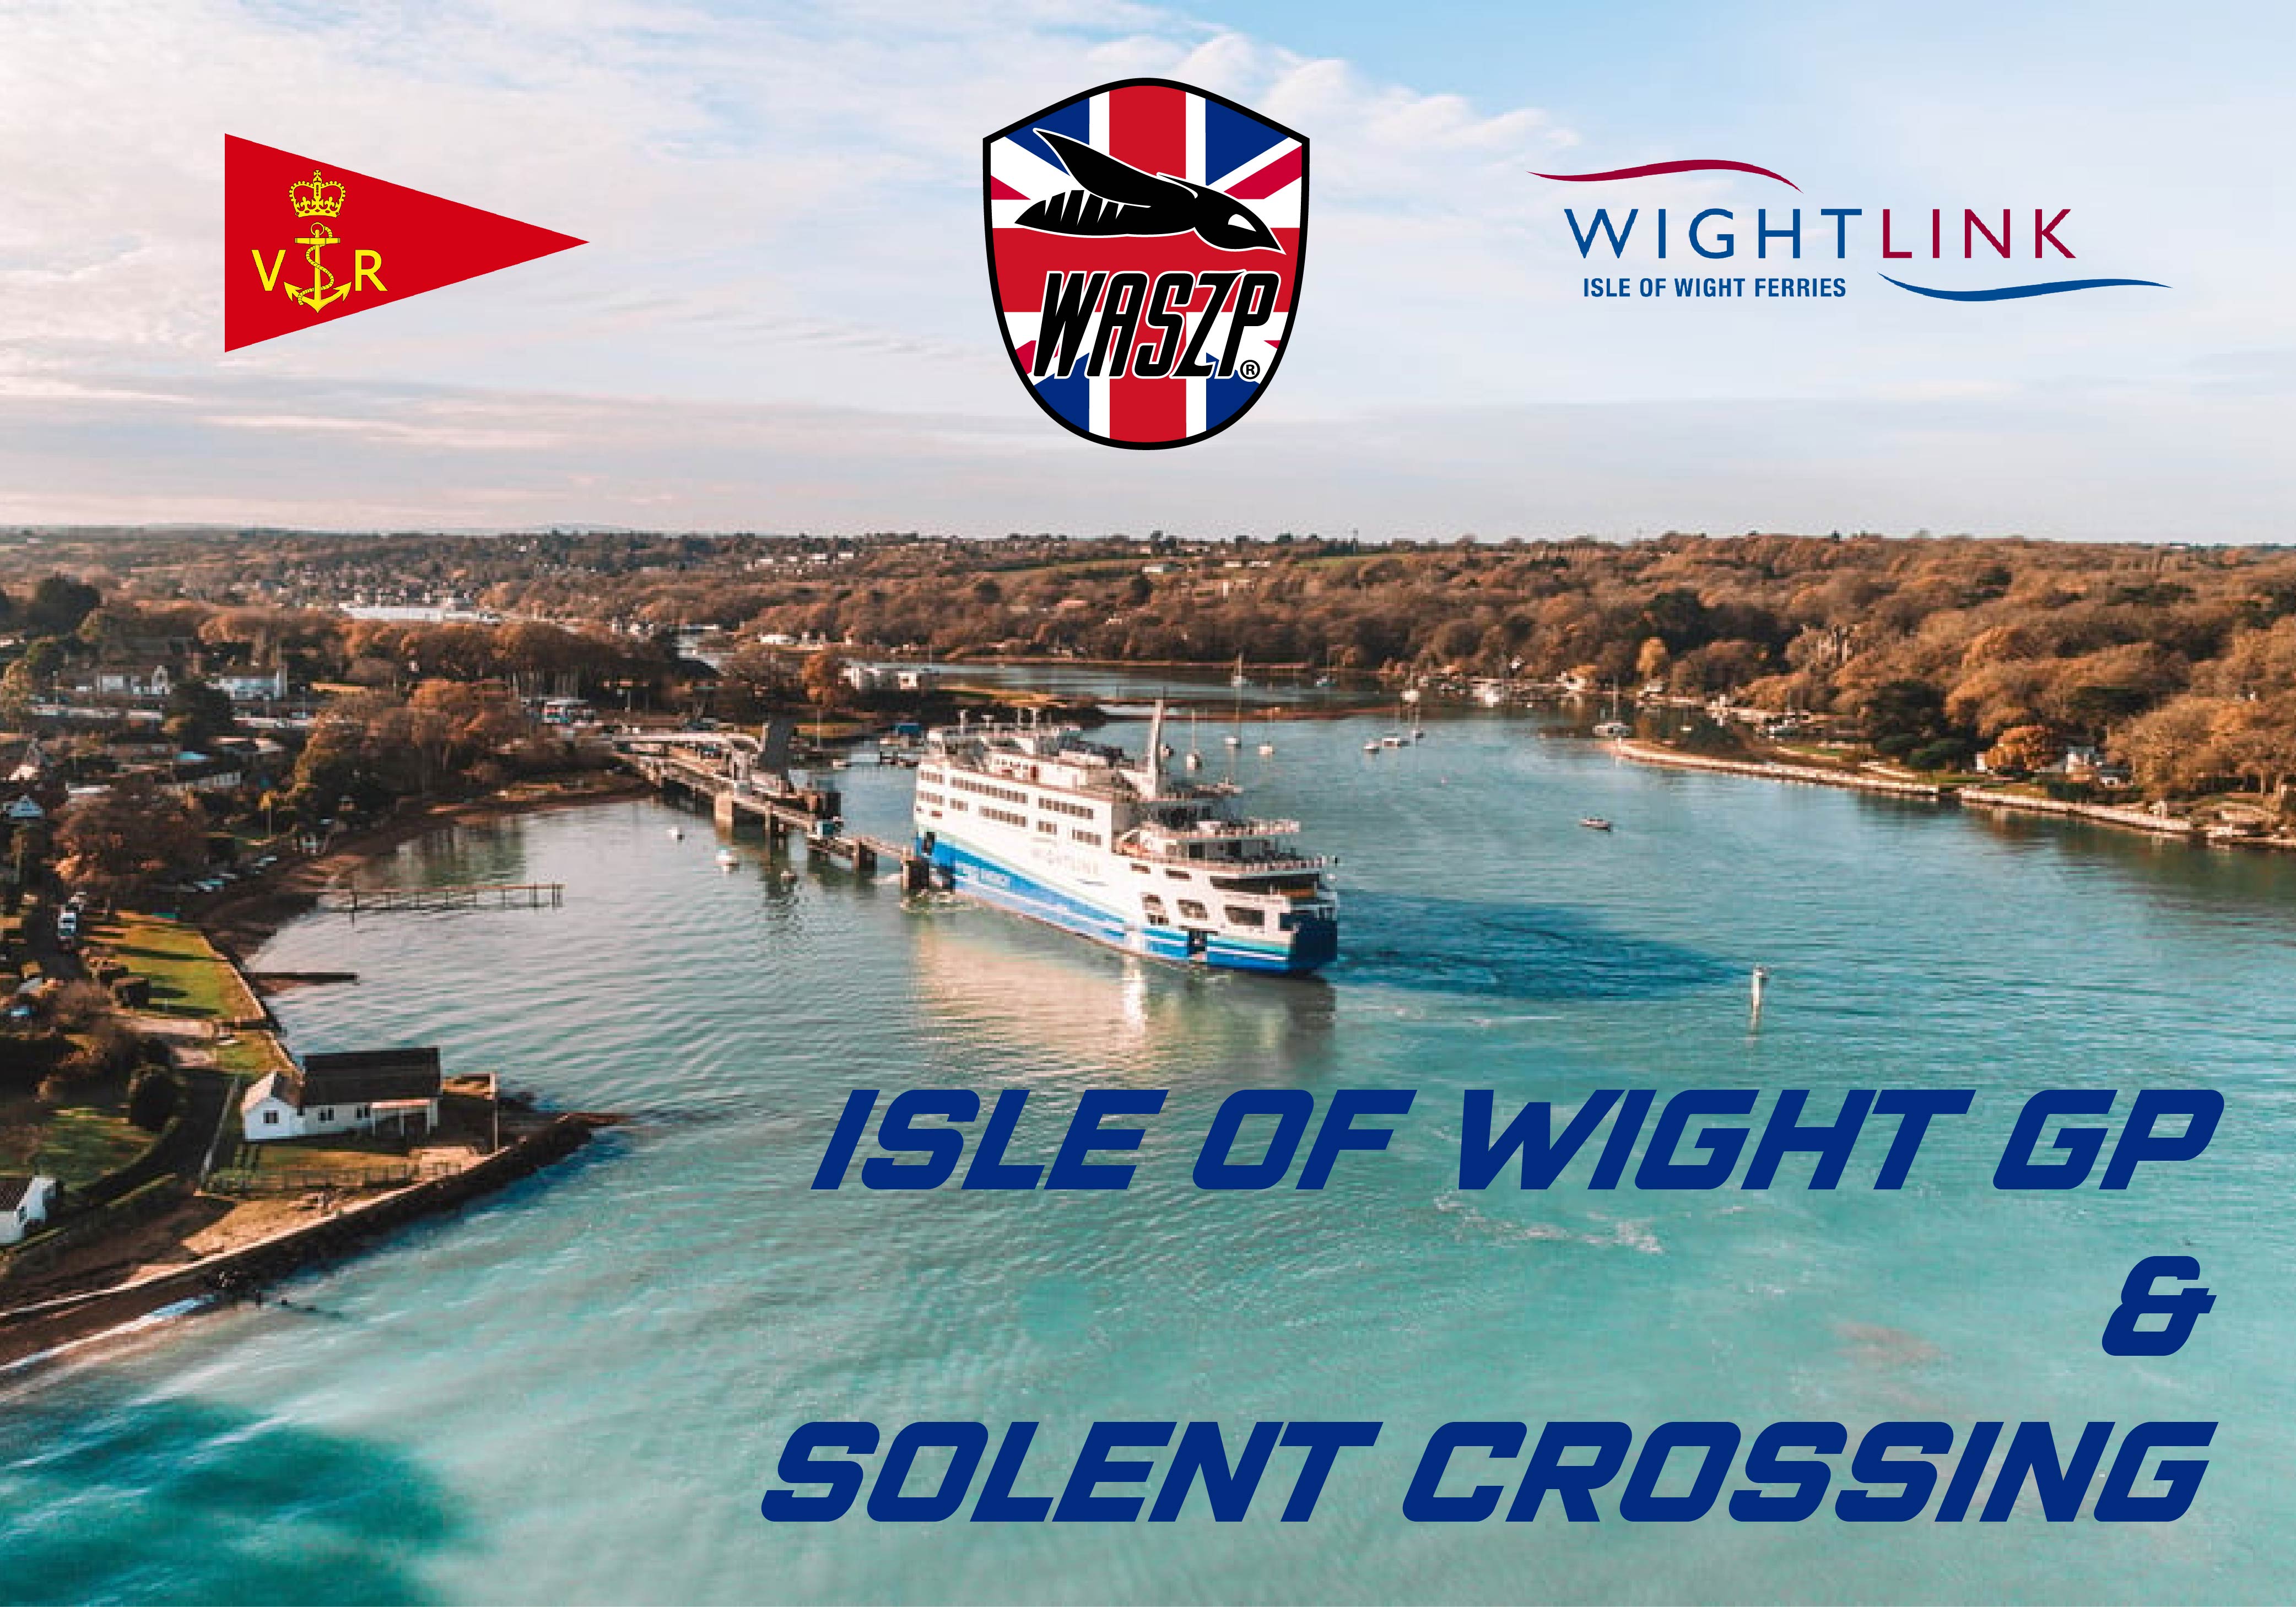 Isle of Wight GP & Solent Crossing